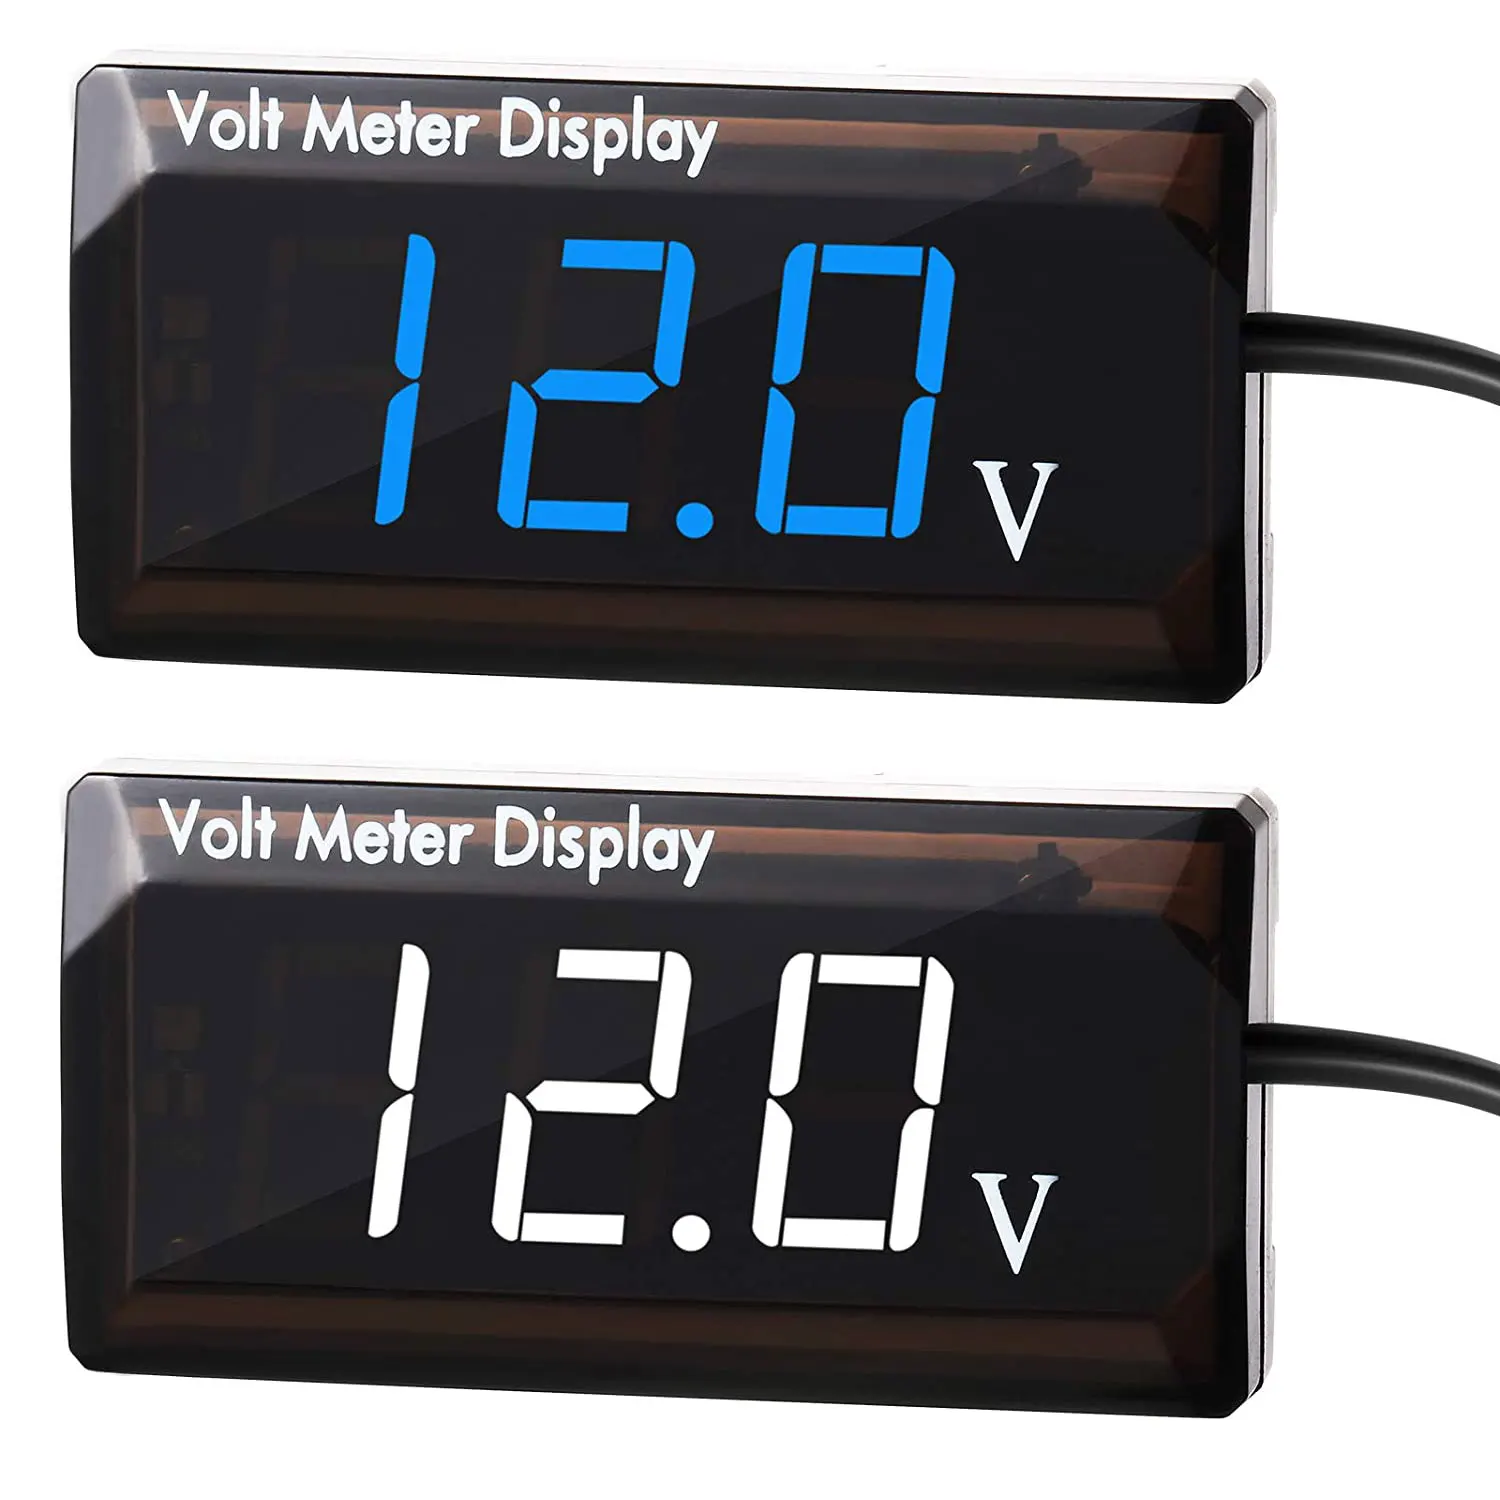 

Car Digital Voltmeter 12V Voltage Meter Car Audio Gauge LED Display 12V Meter Waterproof Voltage Gauge Meter for Car Motorcycle